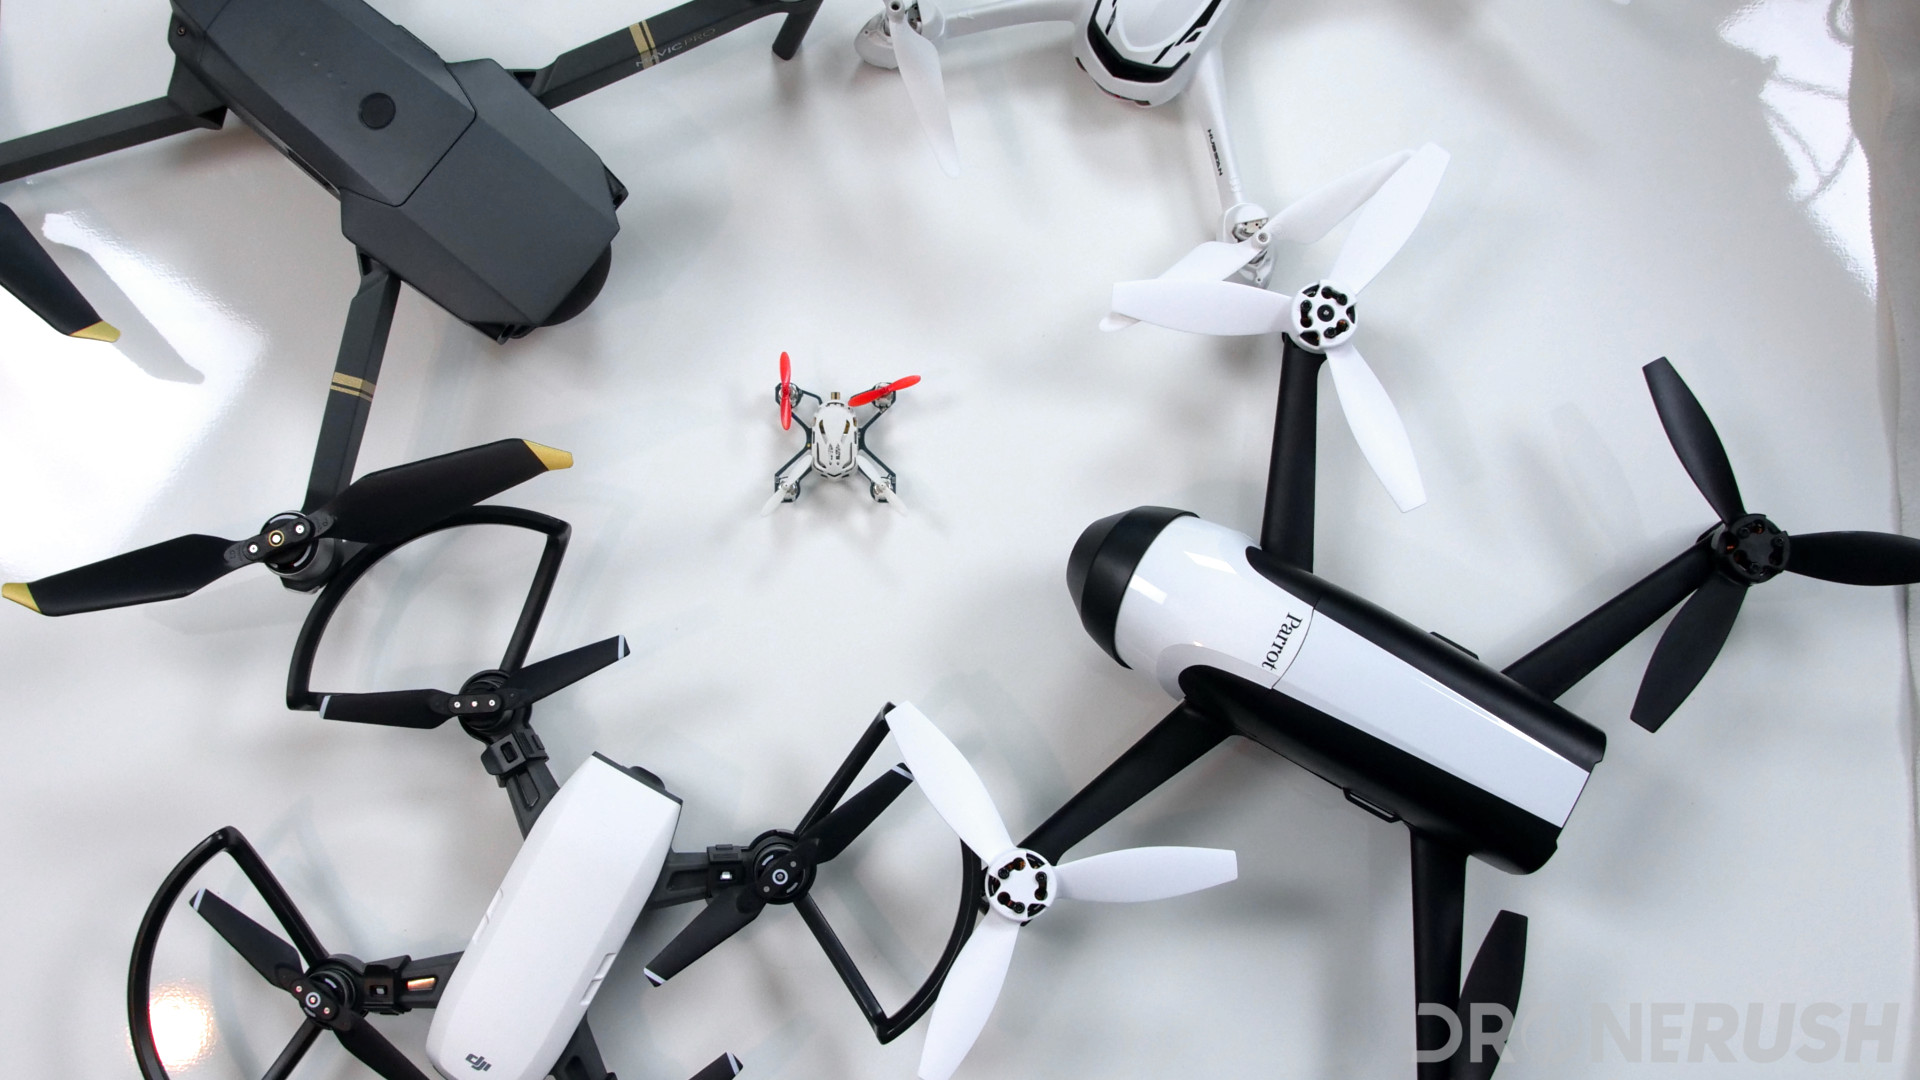 receta dulce Cha Top drone manufacturers - the retail drone market - Drone Rush